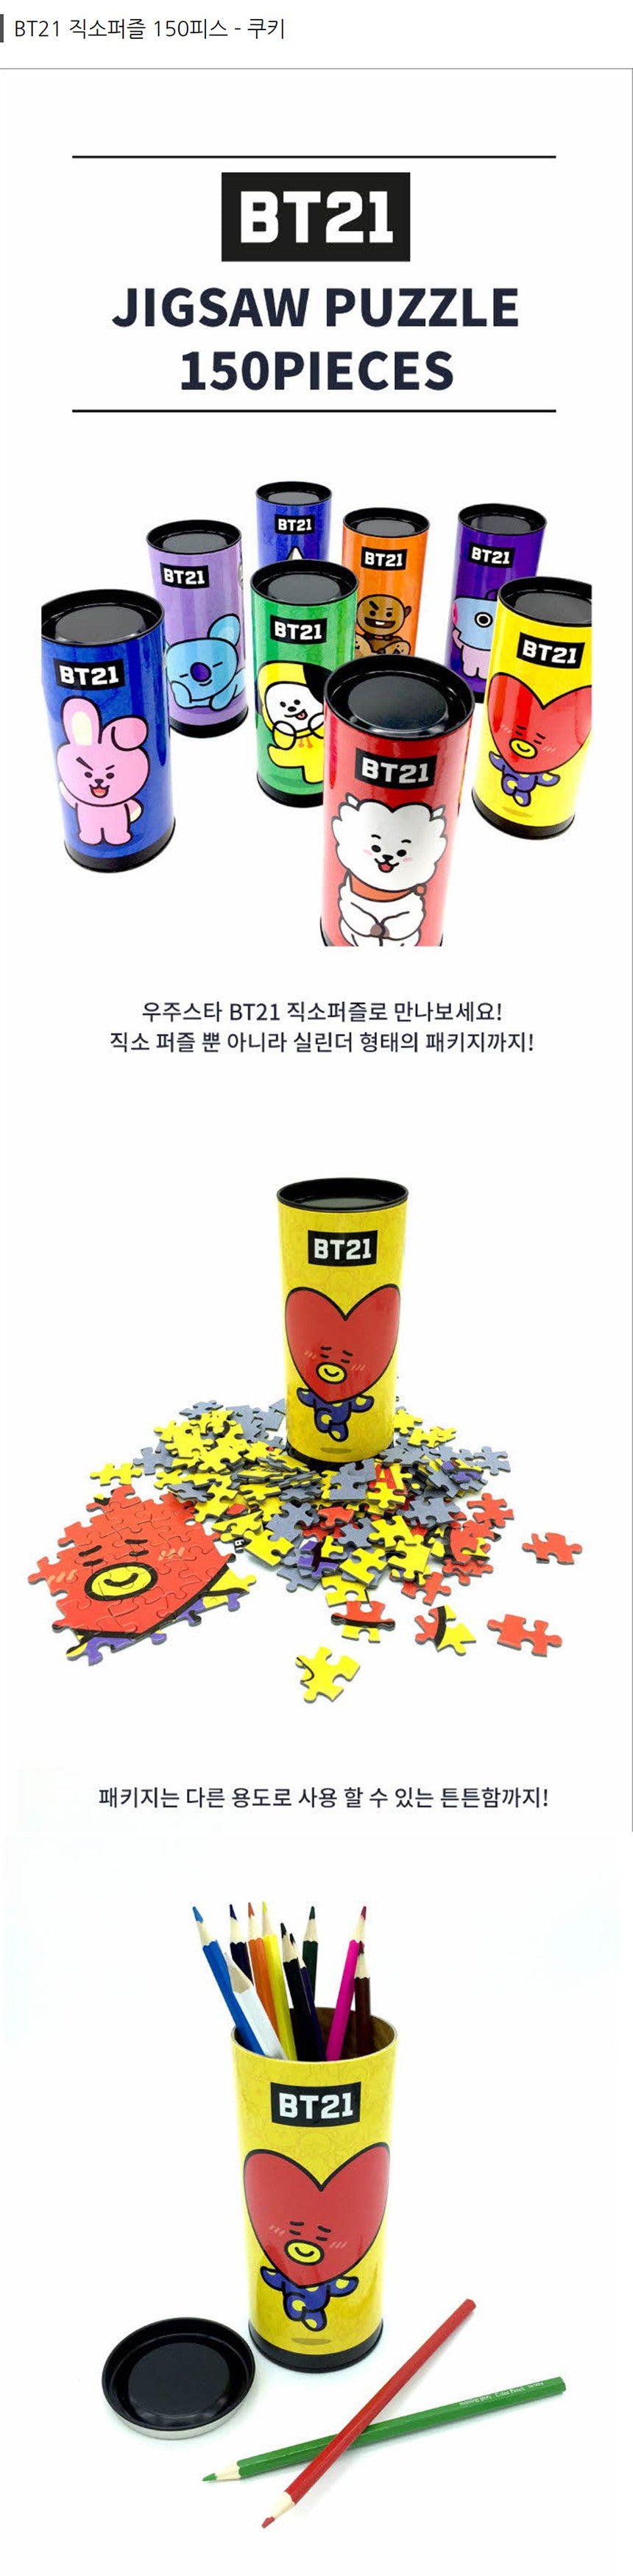 BT21 Character Jigsaw Puzzle 150pcs